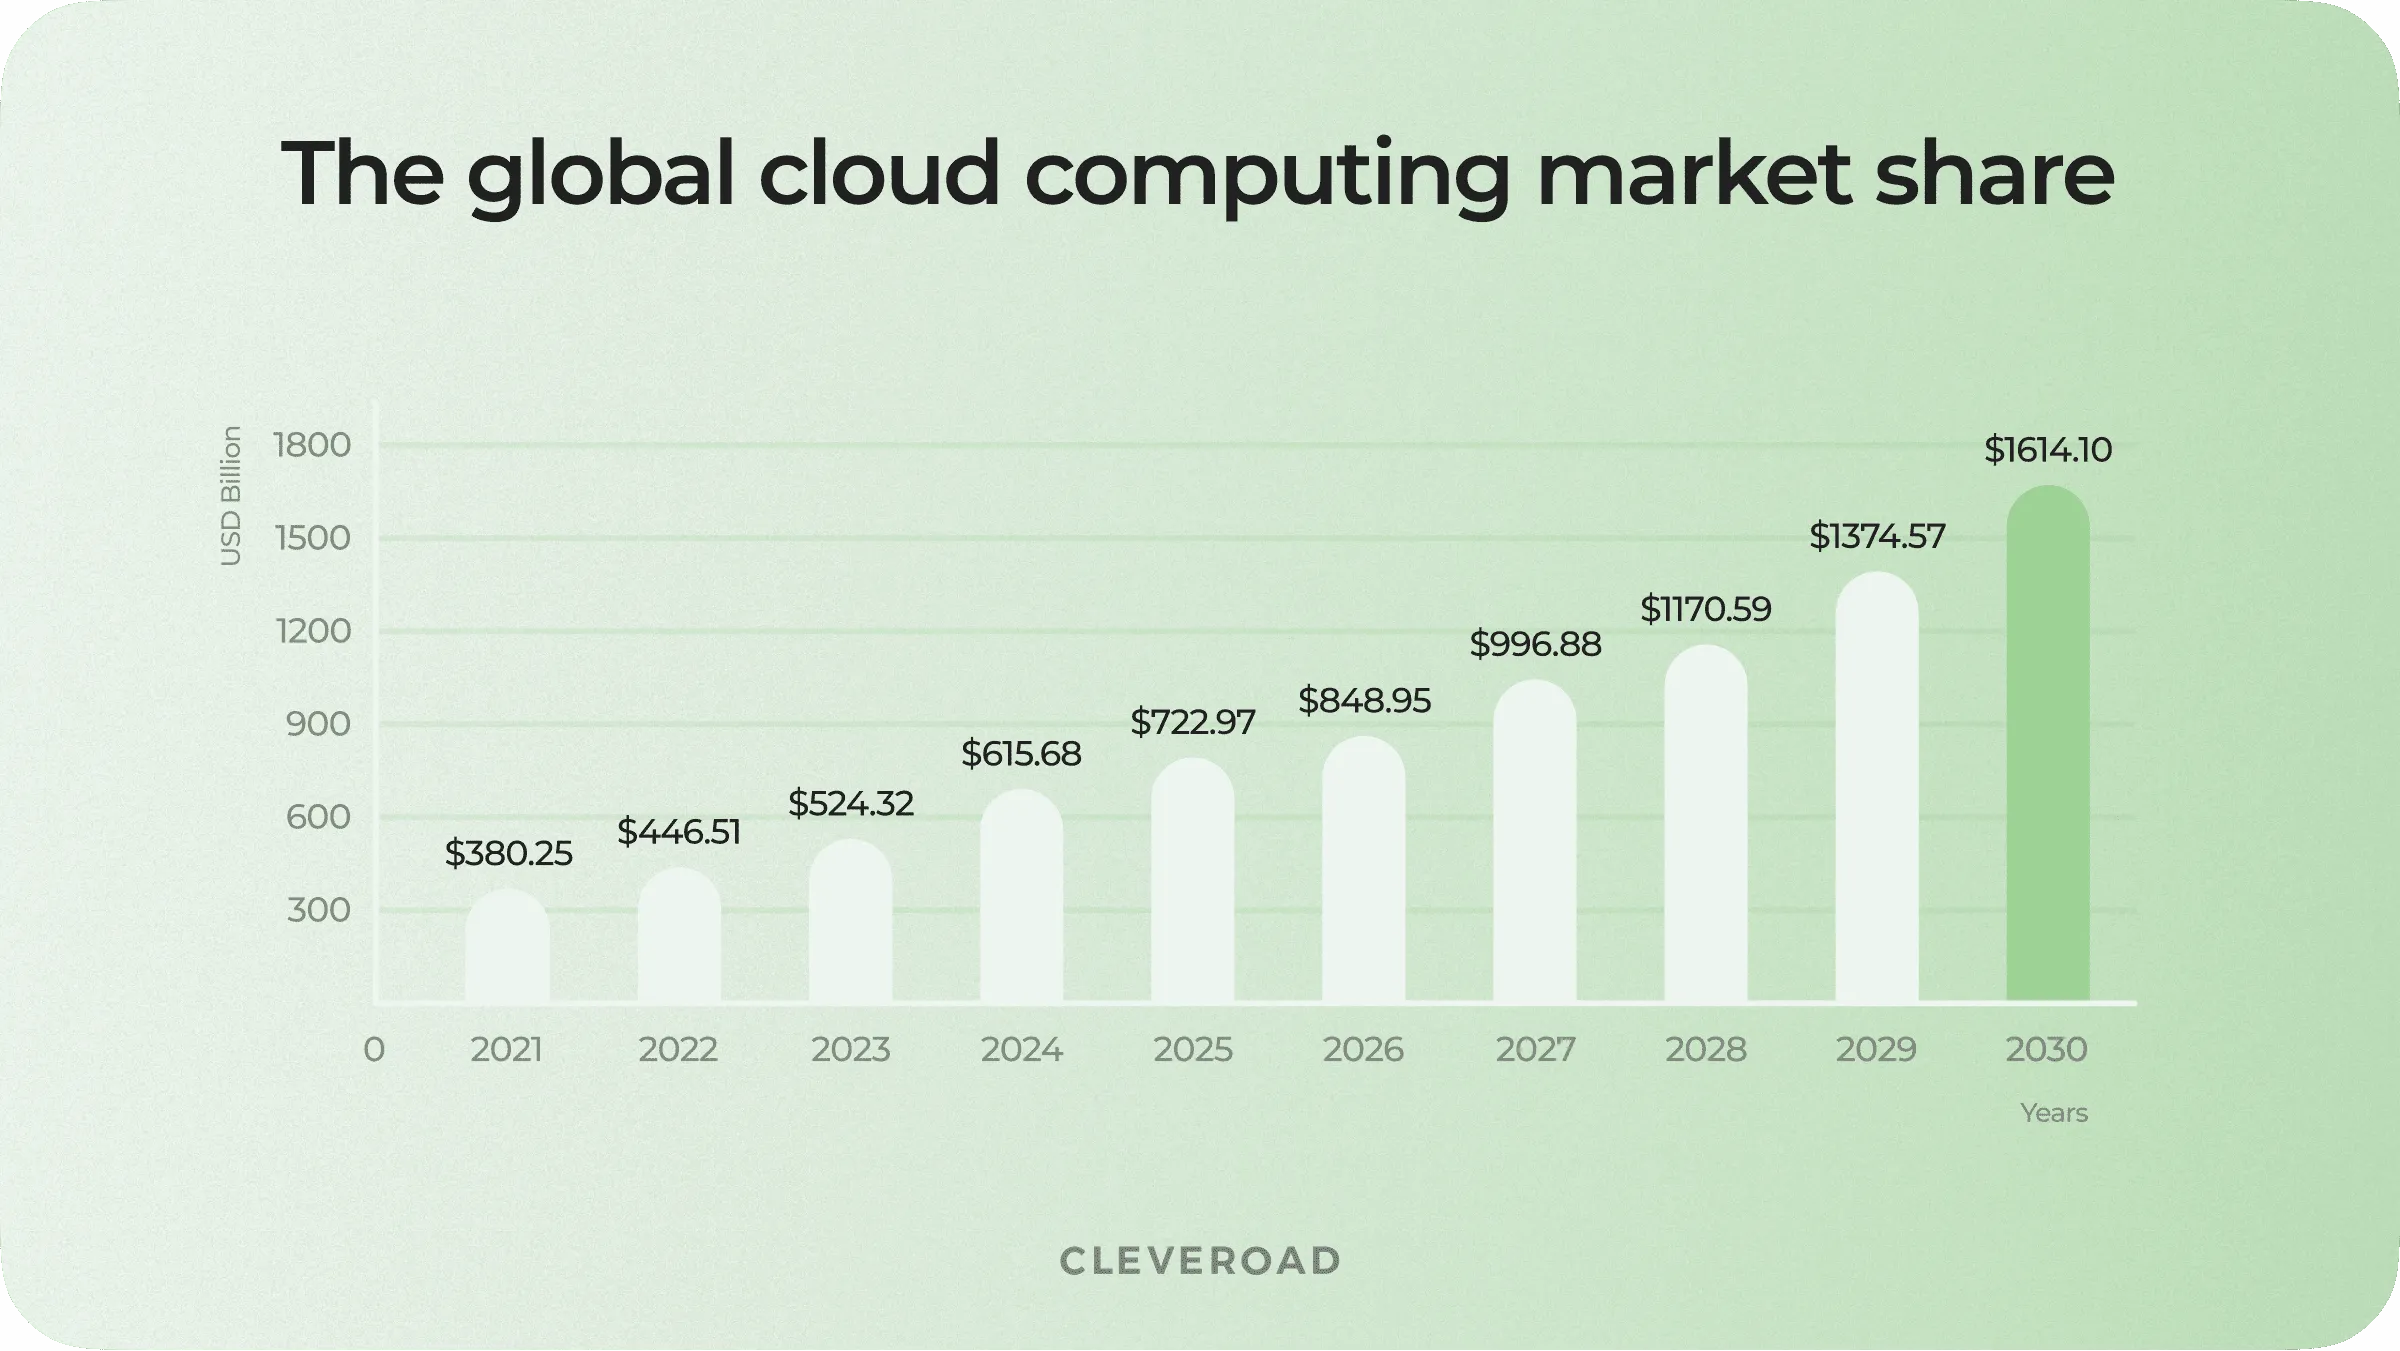 The global cloud computing market share